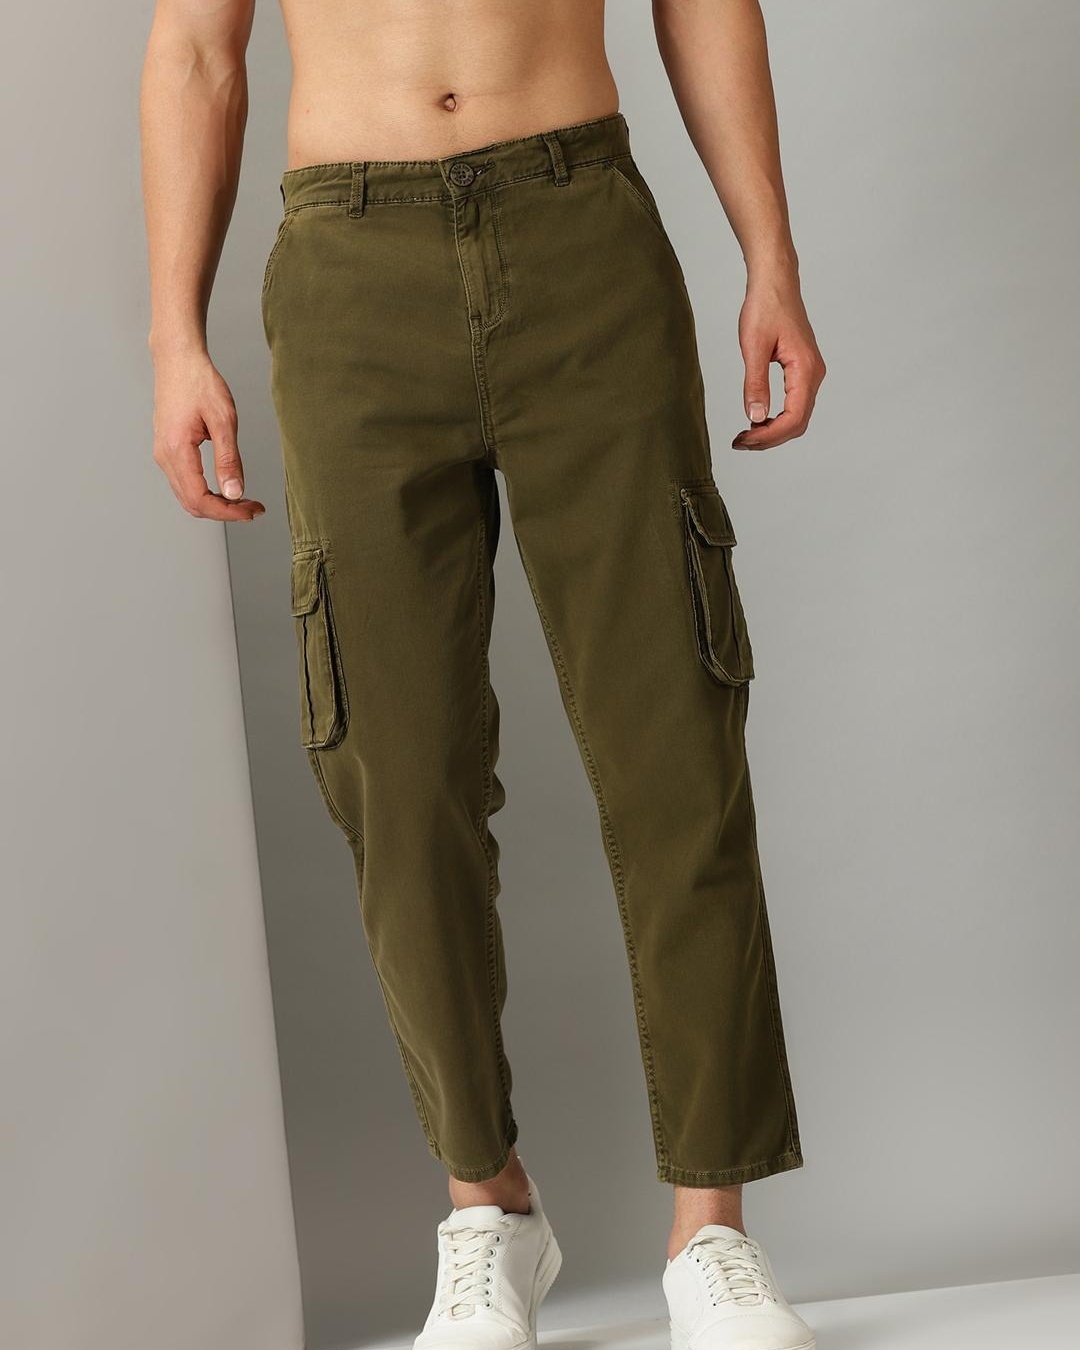 Buy Khaki Trousers  Pants for Men by LC Waikiki Online  Ajiocom